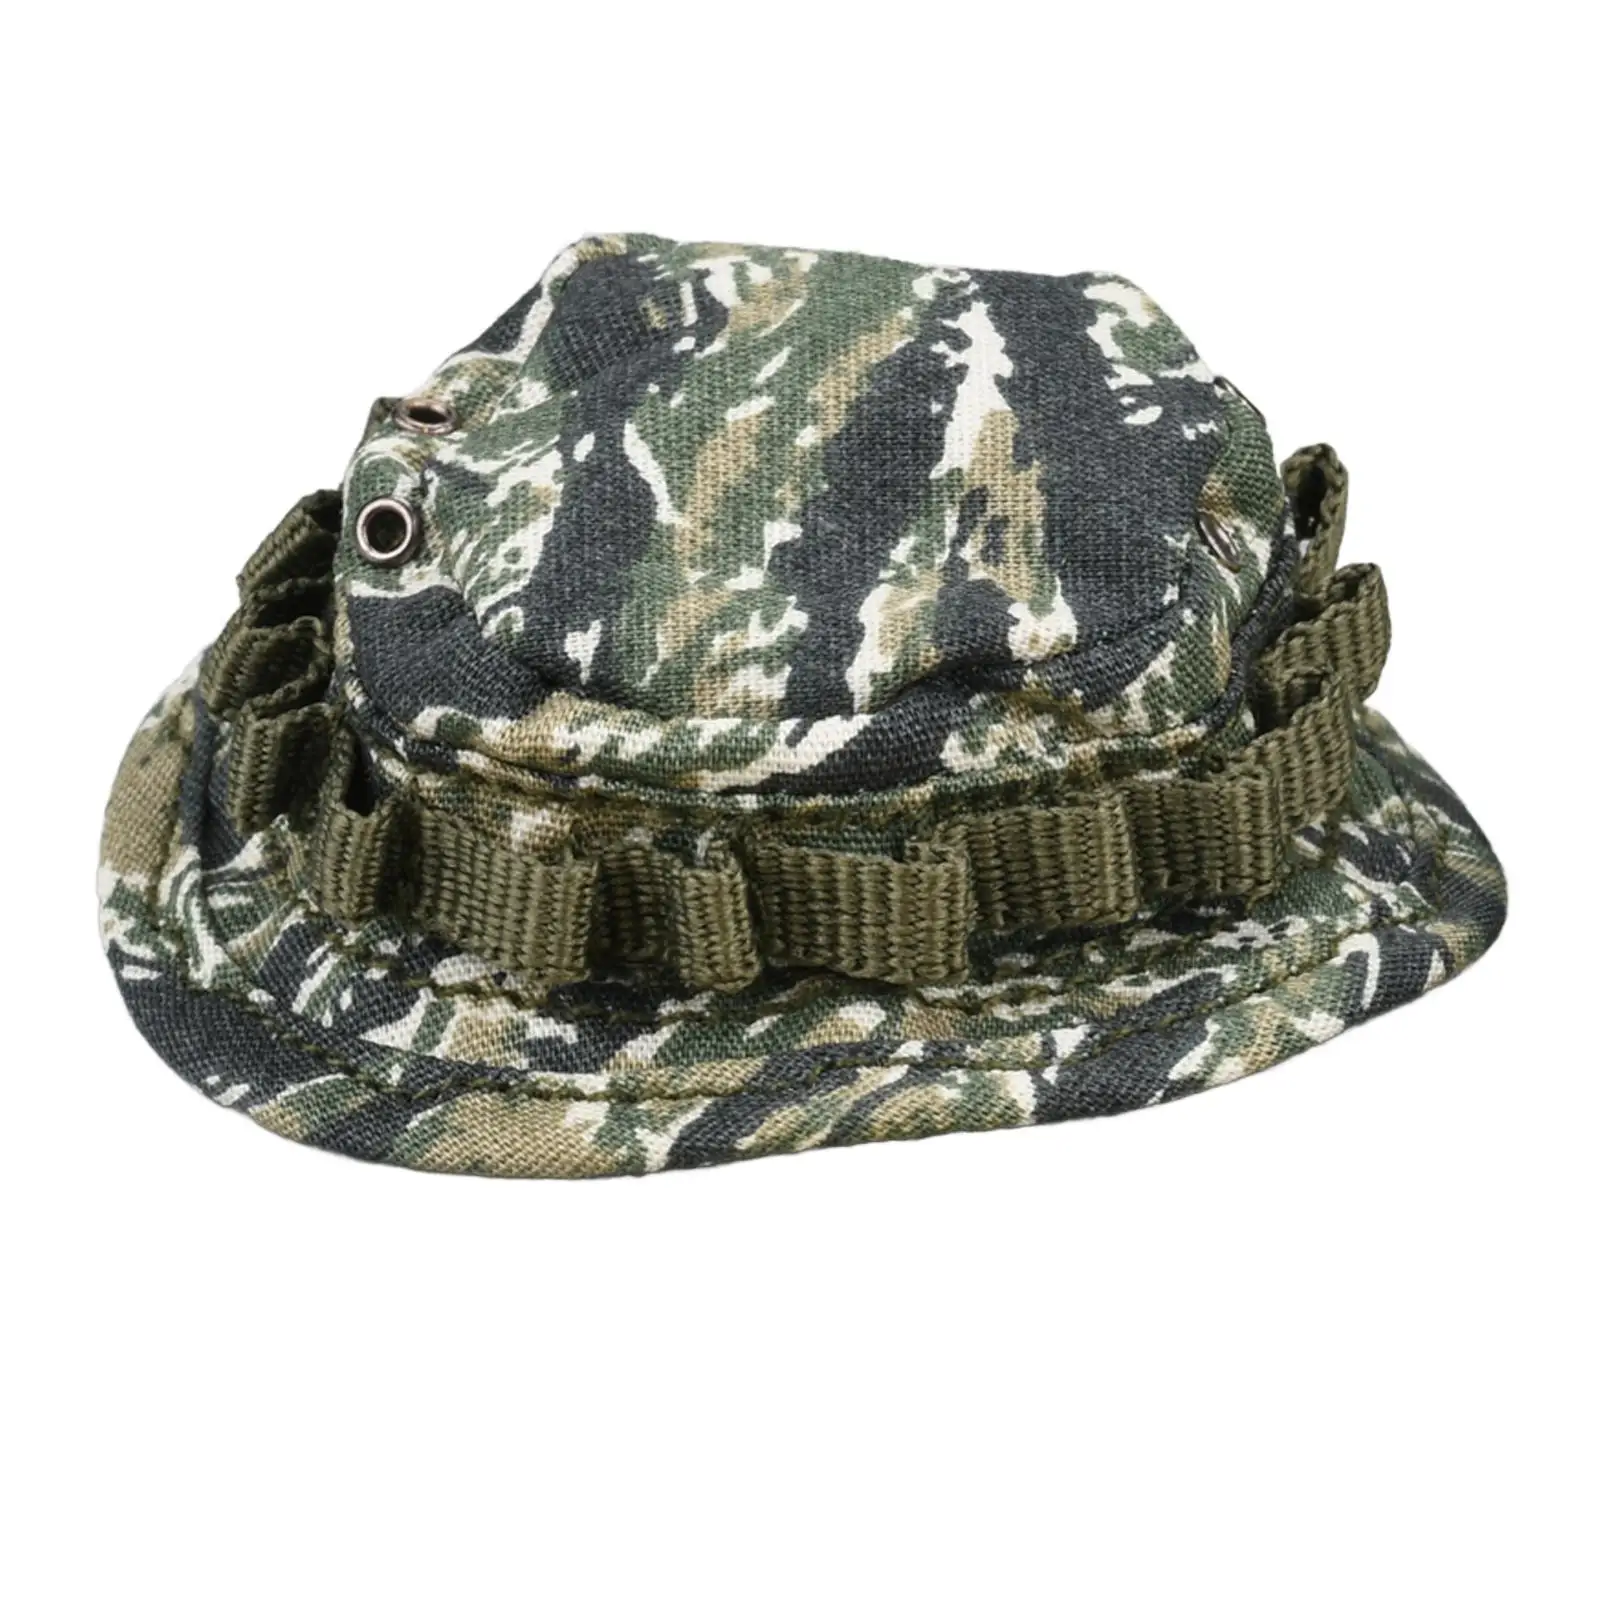 1/6 Model Solider Hat, Fashion Decor, Pretend Play for 12`` inch Male Soldier